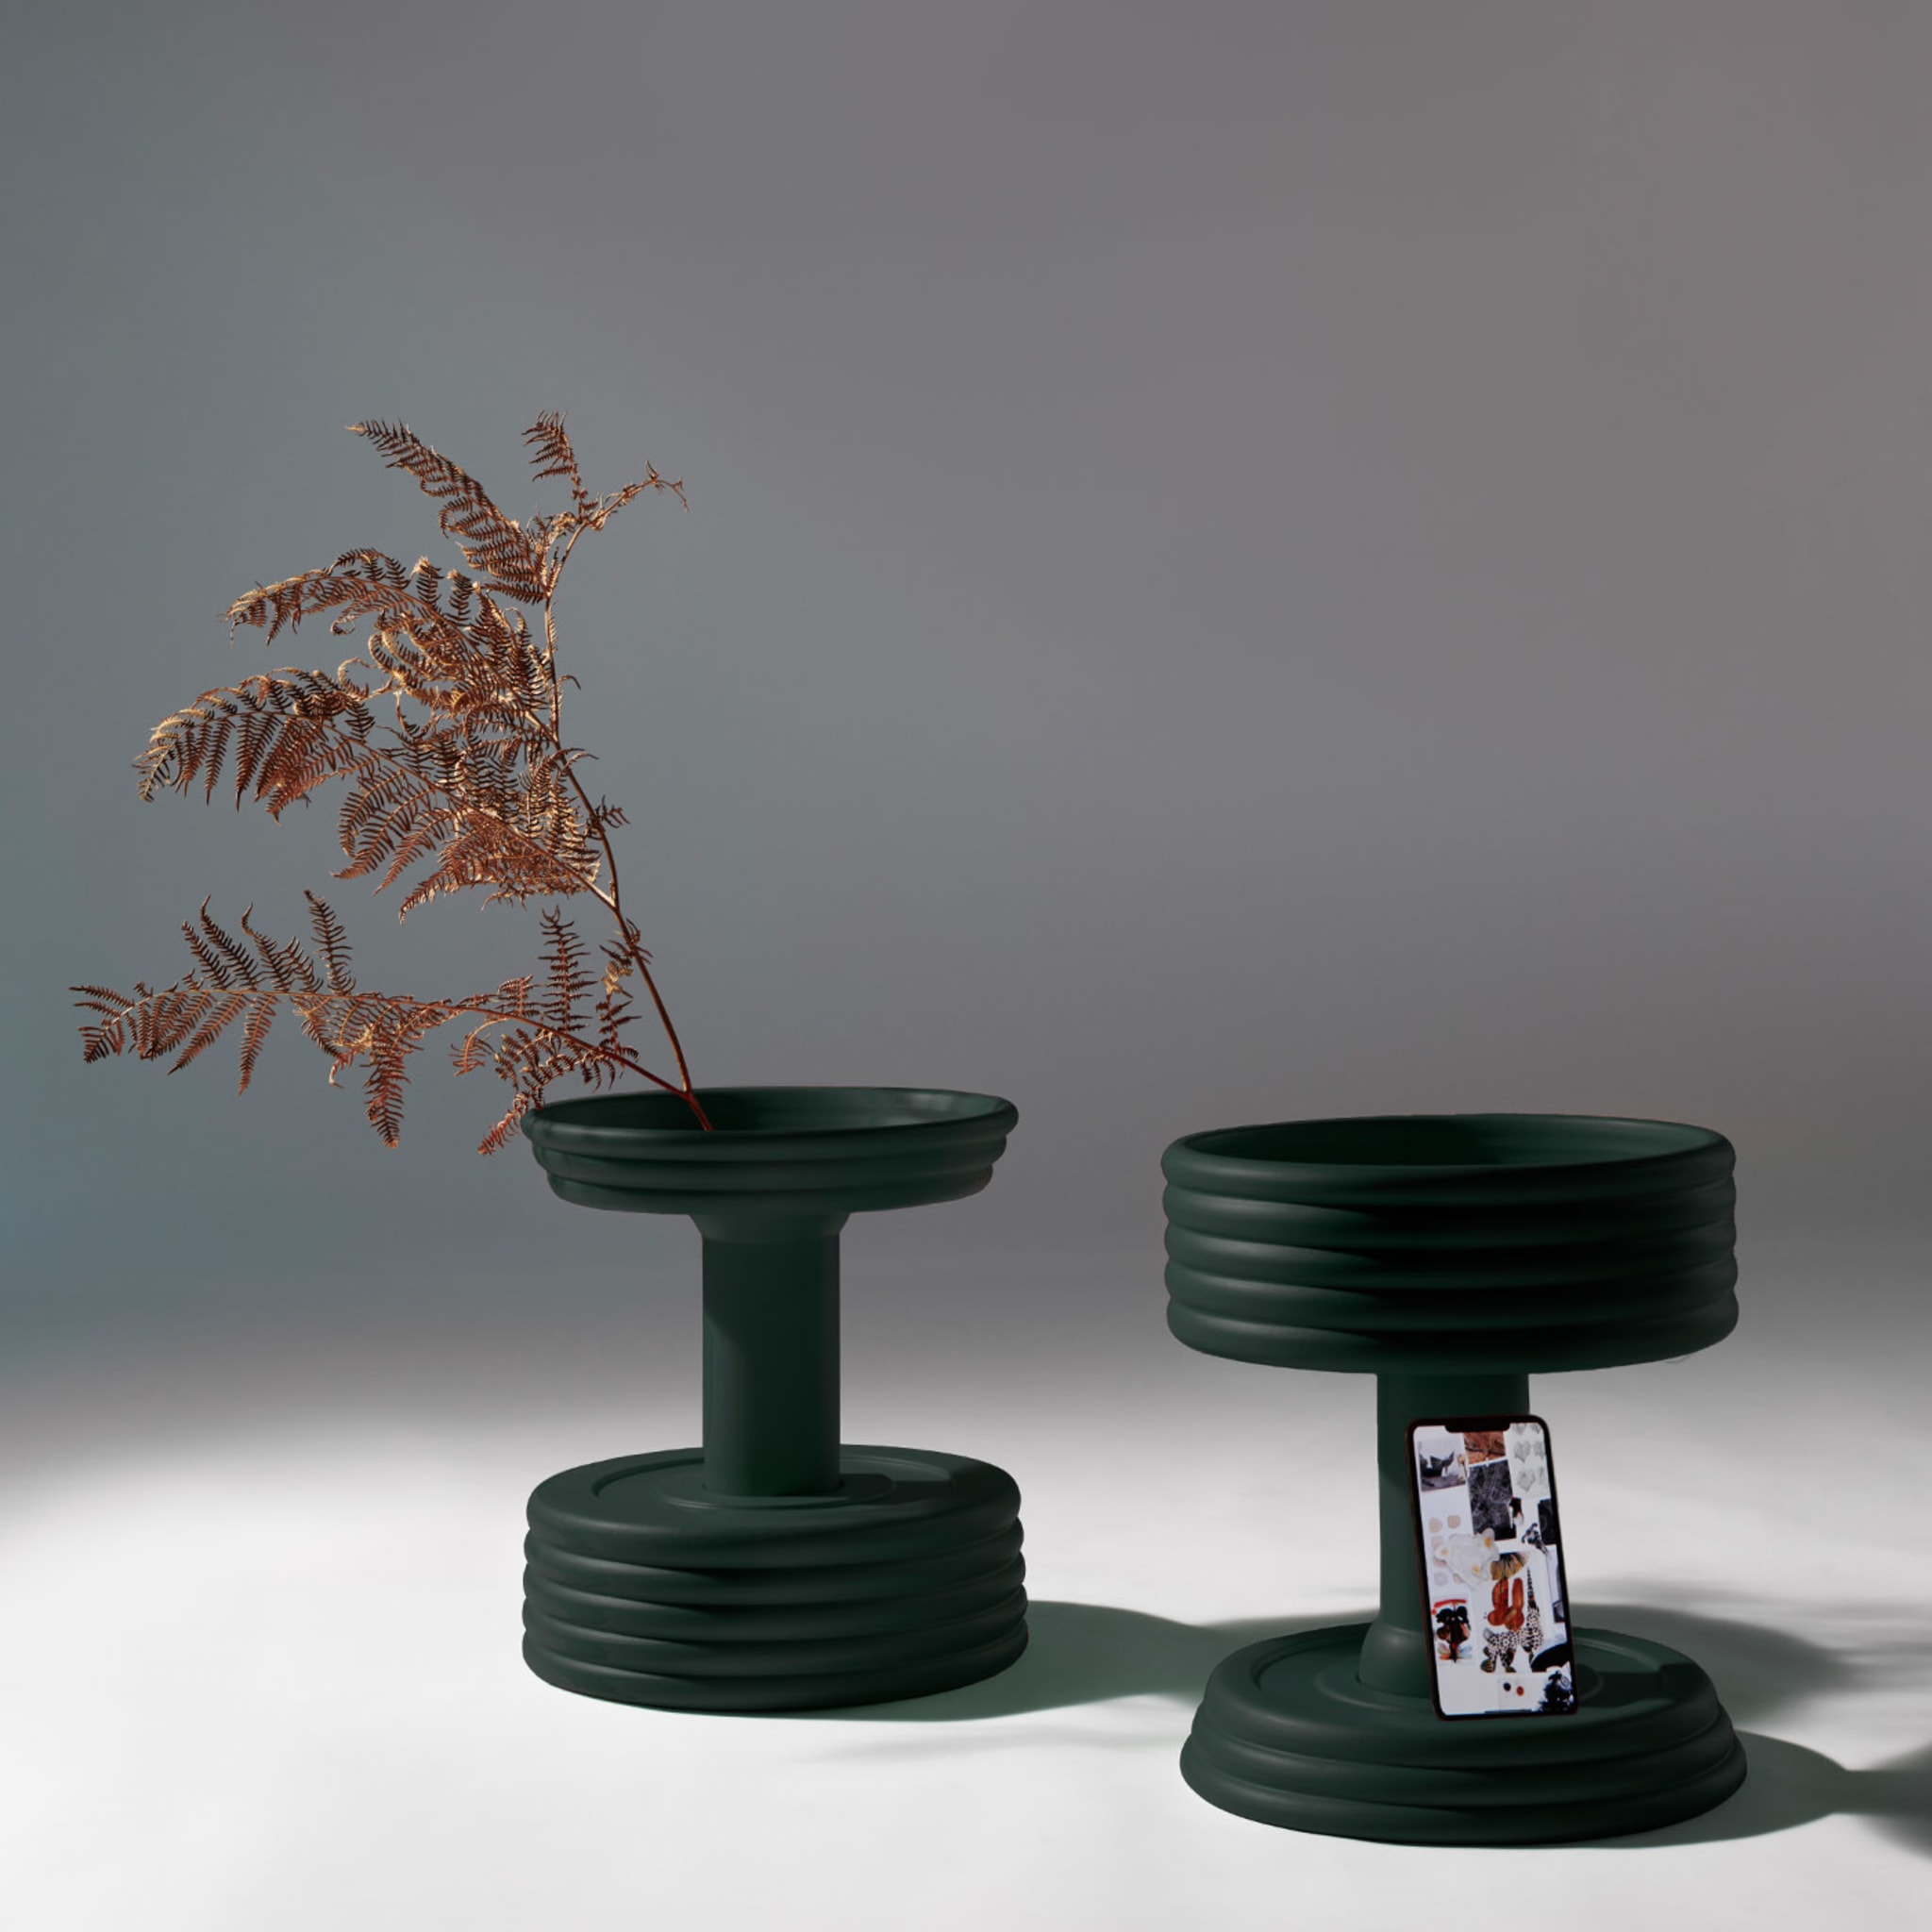 Triplex B Green Ceramic Centerpiece Limited Edition by Andrea Branciforti - Alternative view 1